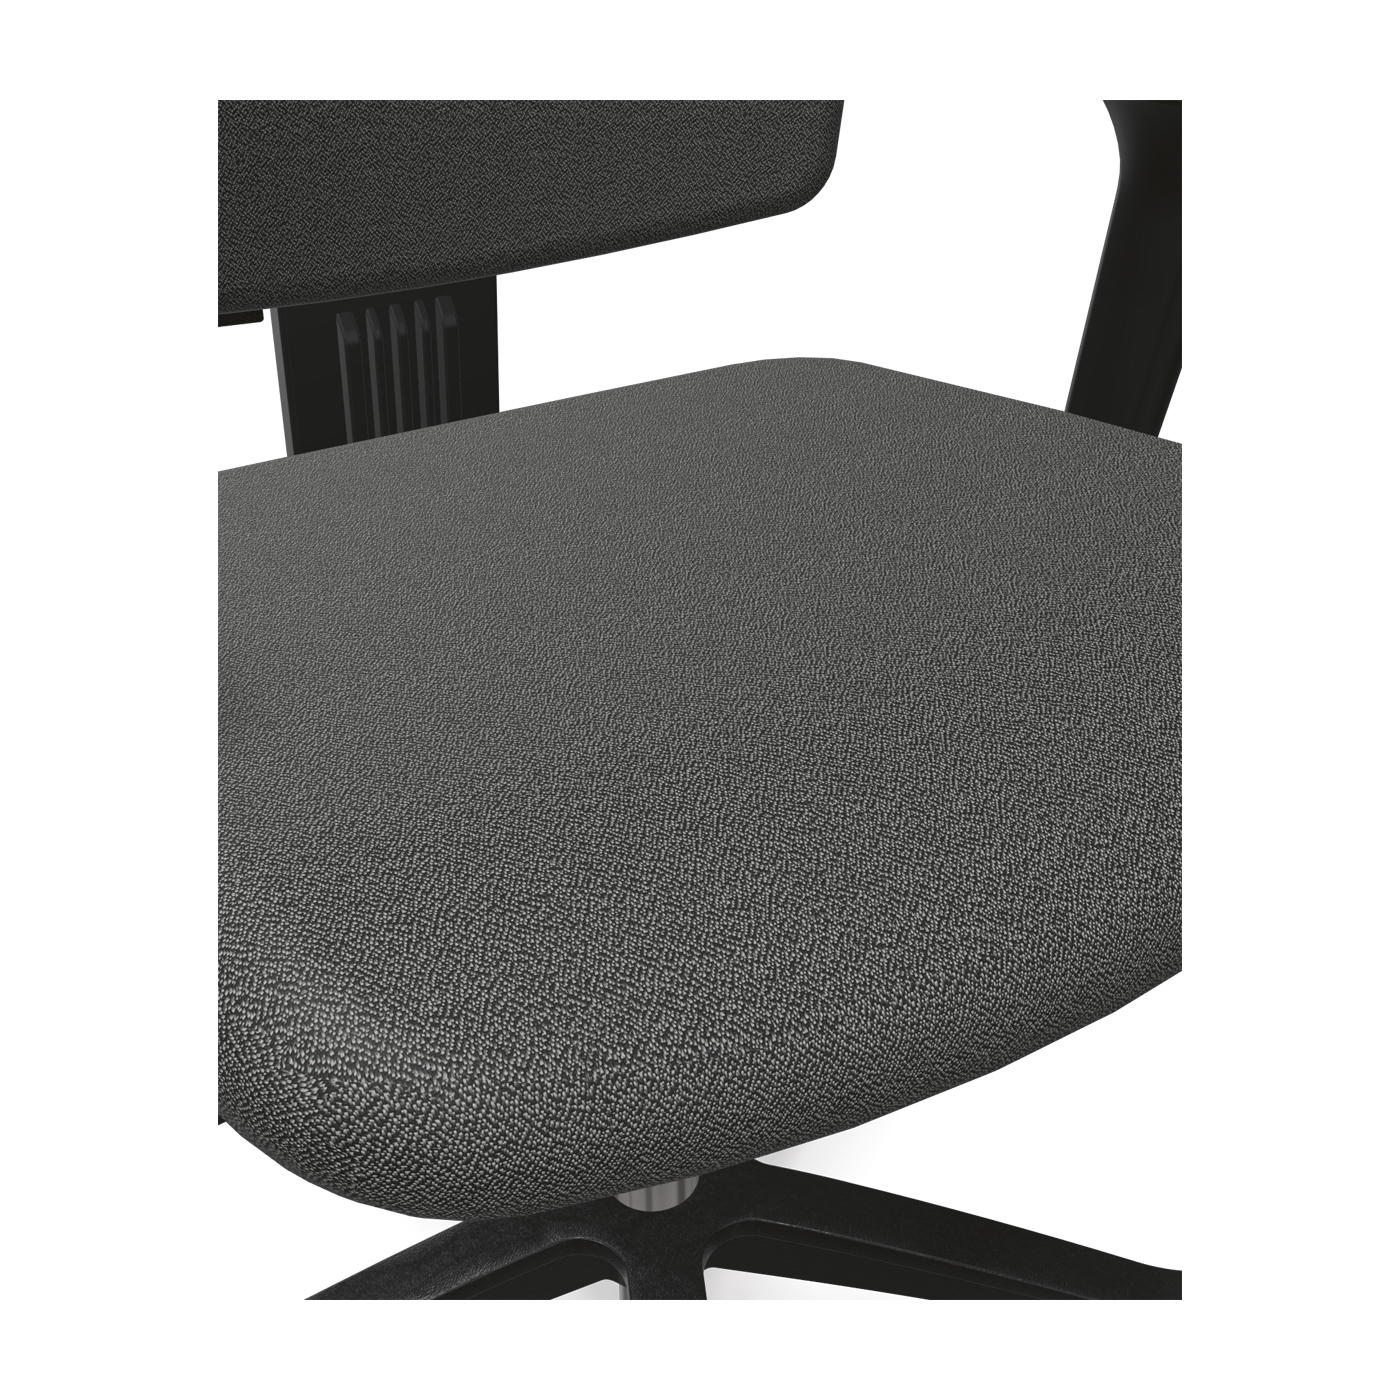 Tec profile Swivel Chair, AB, King Dema - 1 piece